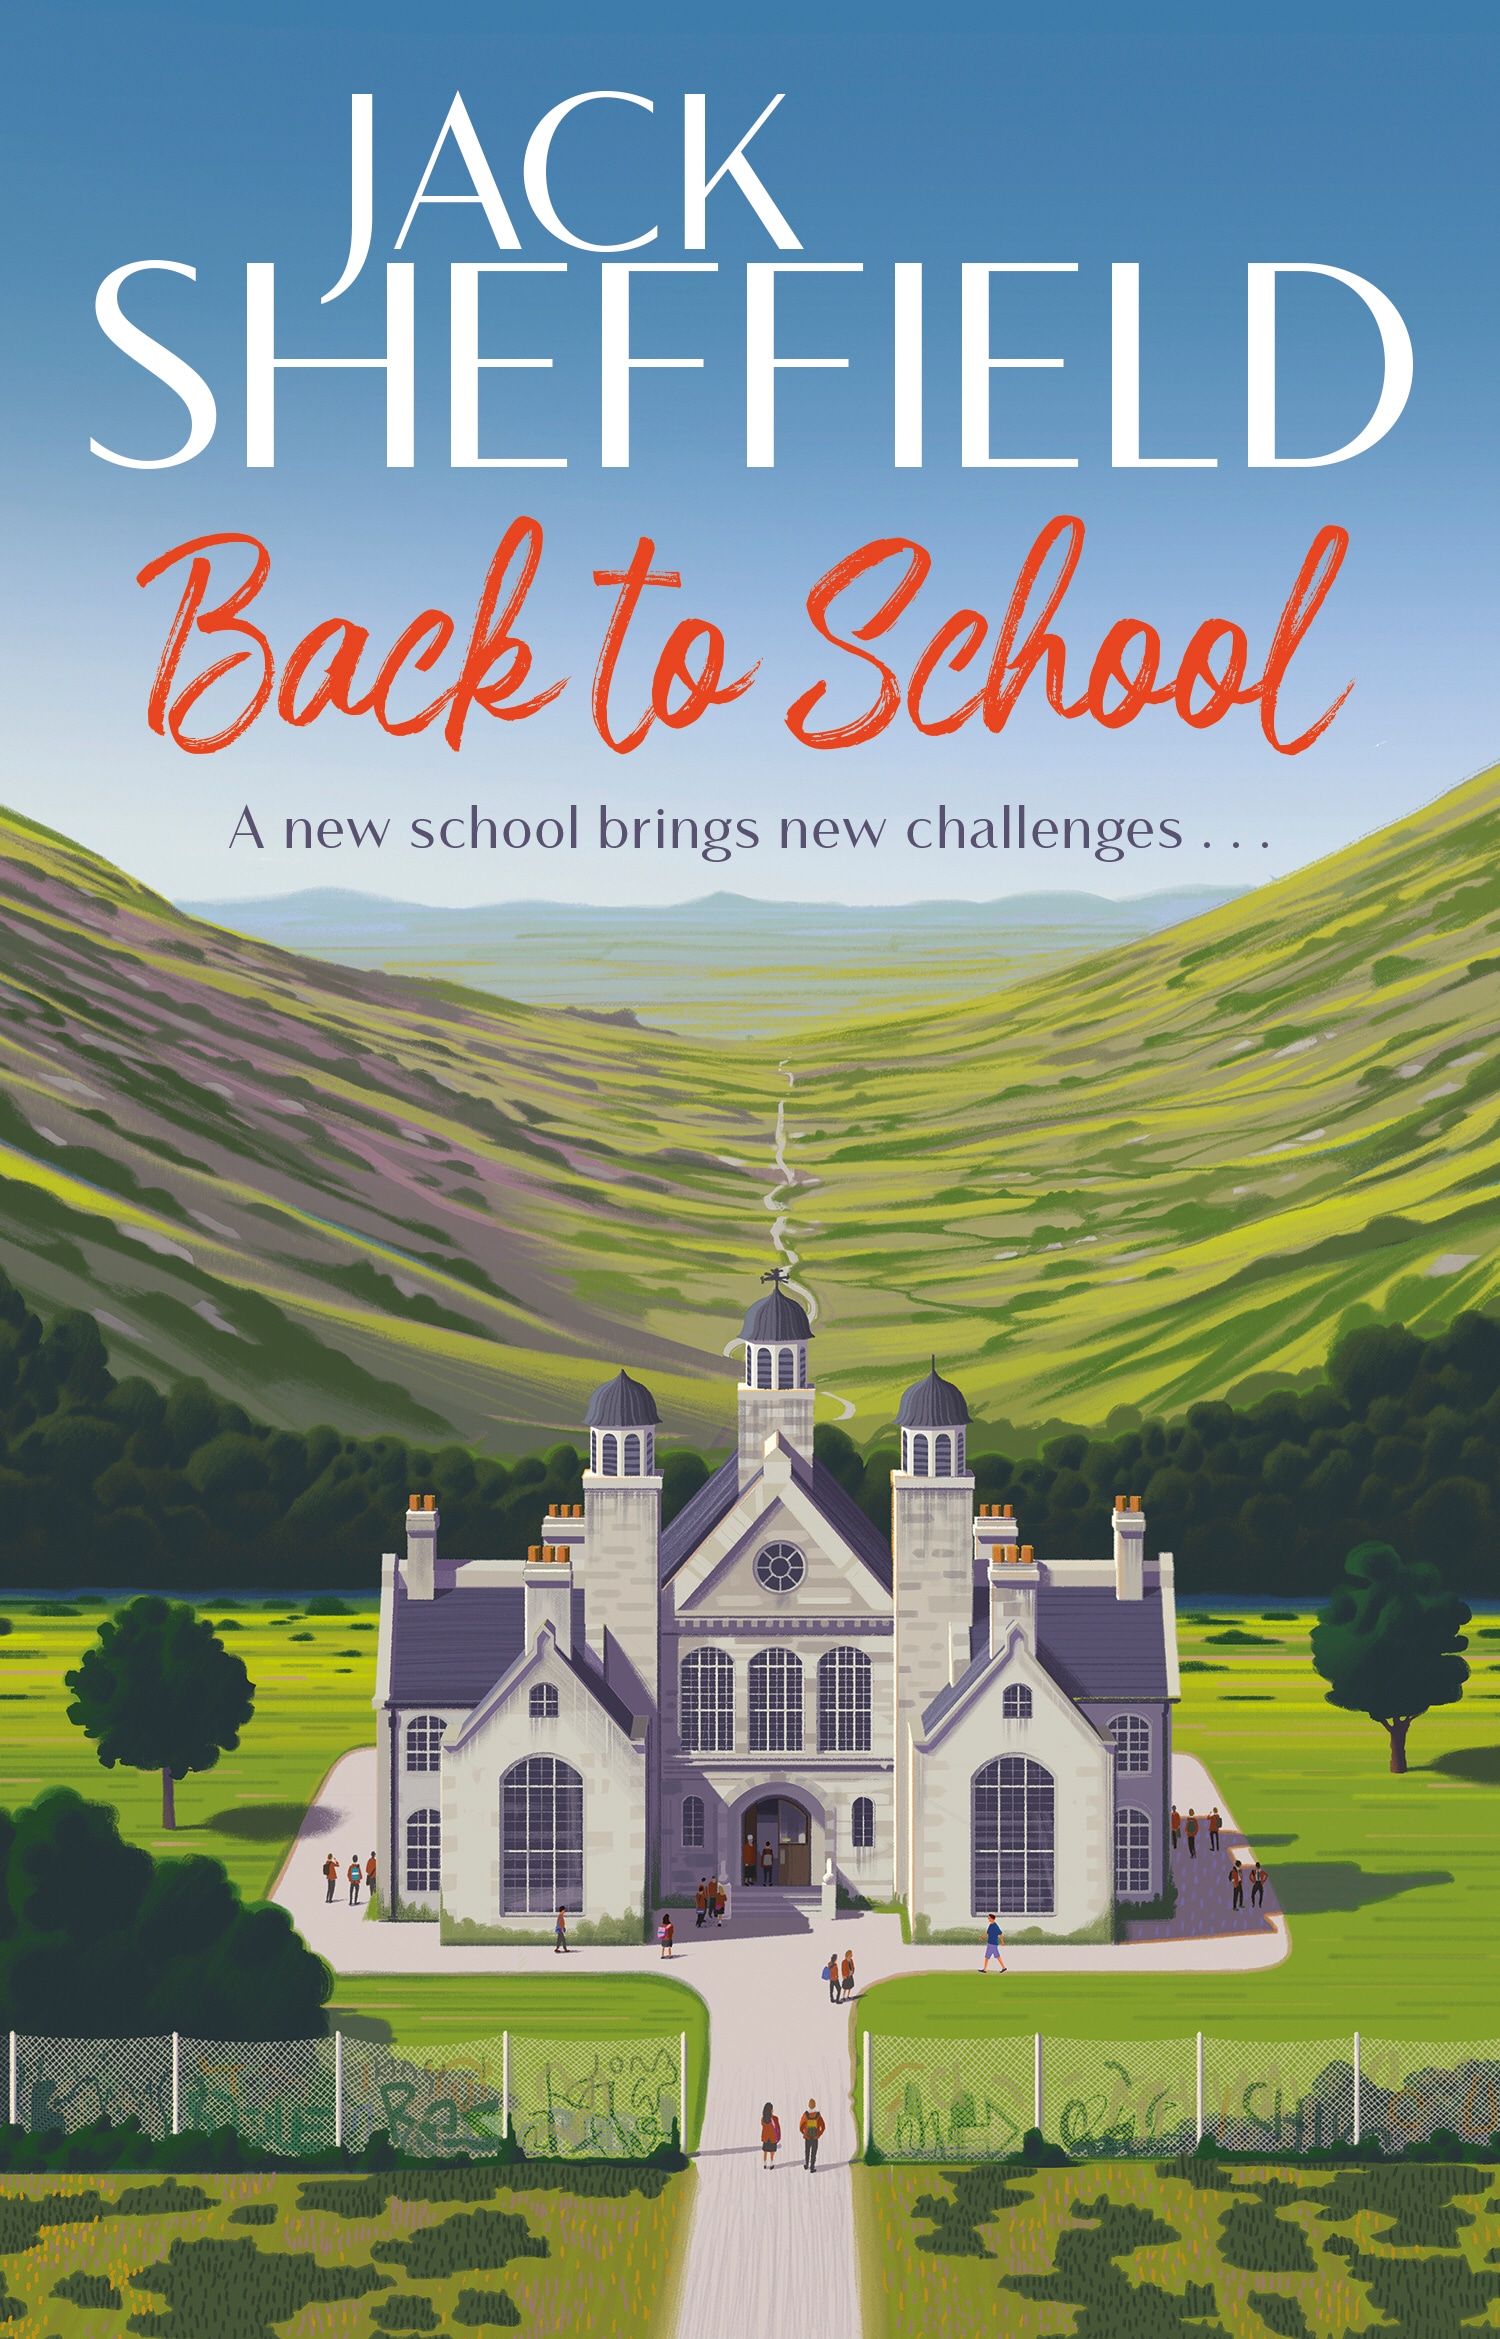 Book “Back to School” by Jack Sheffield — January 14, 2021